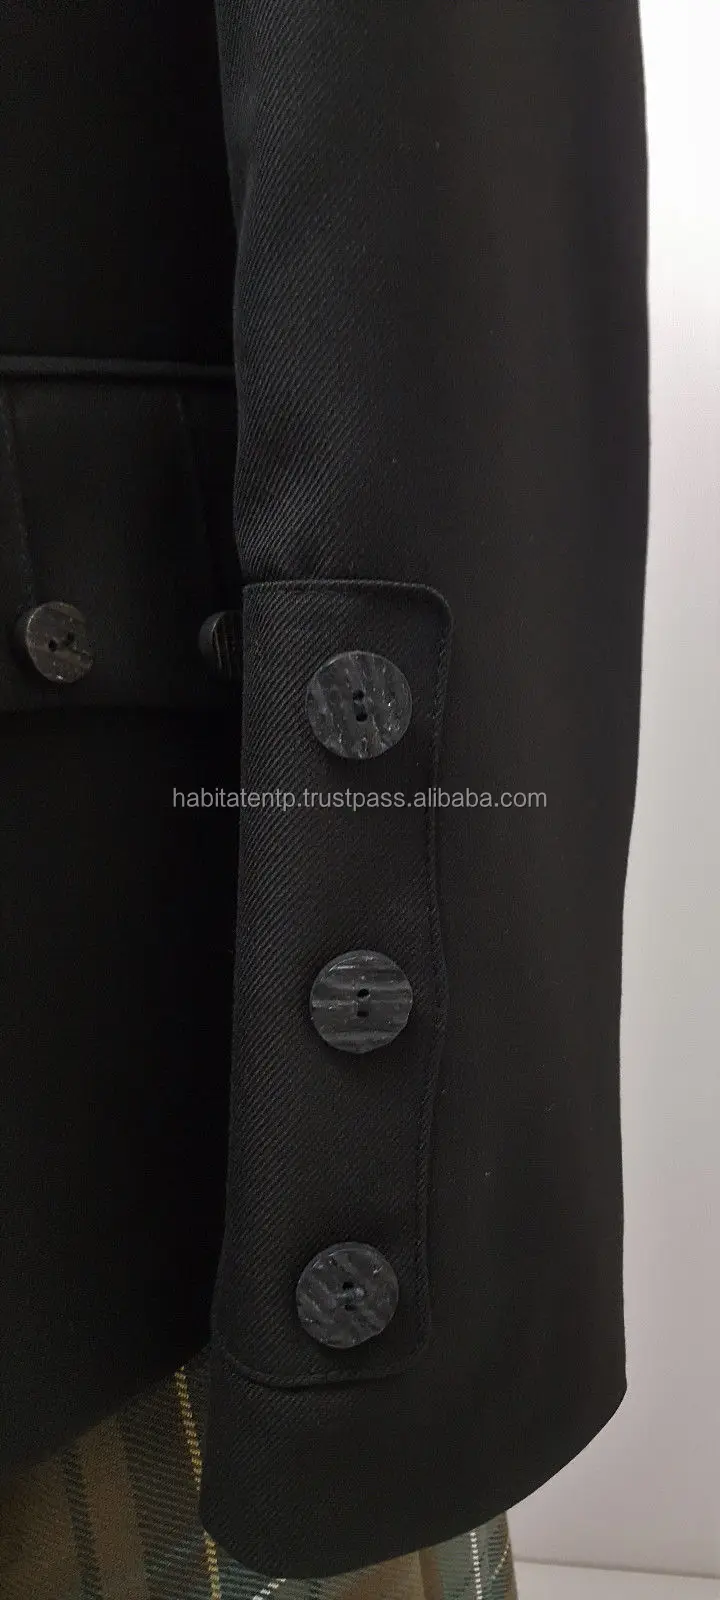 black crail uniform jacket & vest scottish kilts hand made